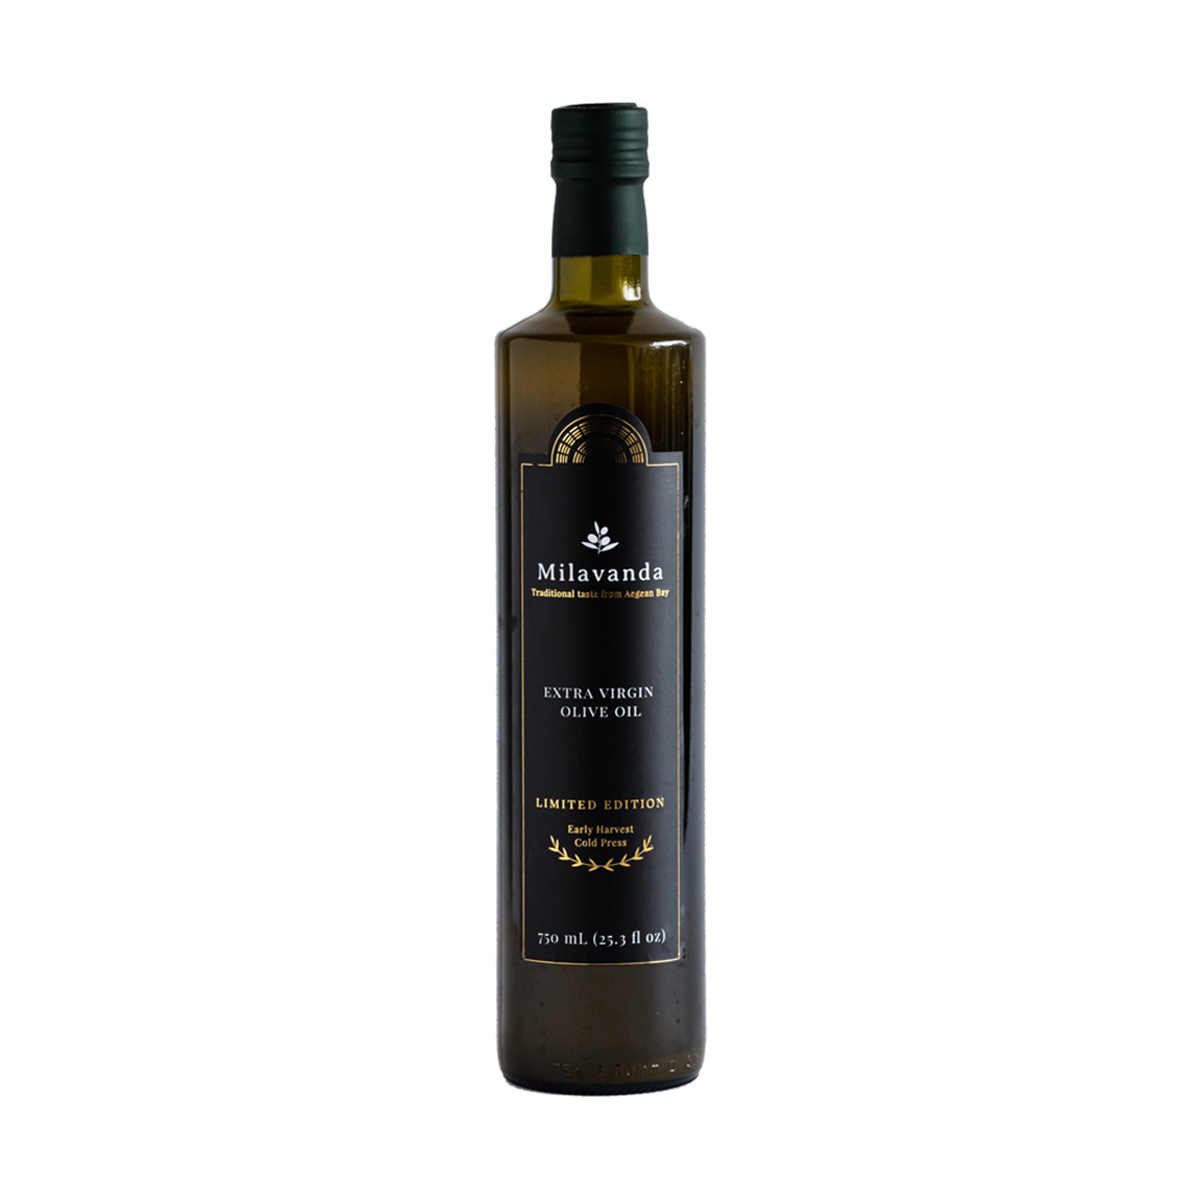 Milavanda limited edition early harvest extra virgin olive oil